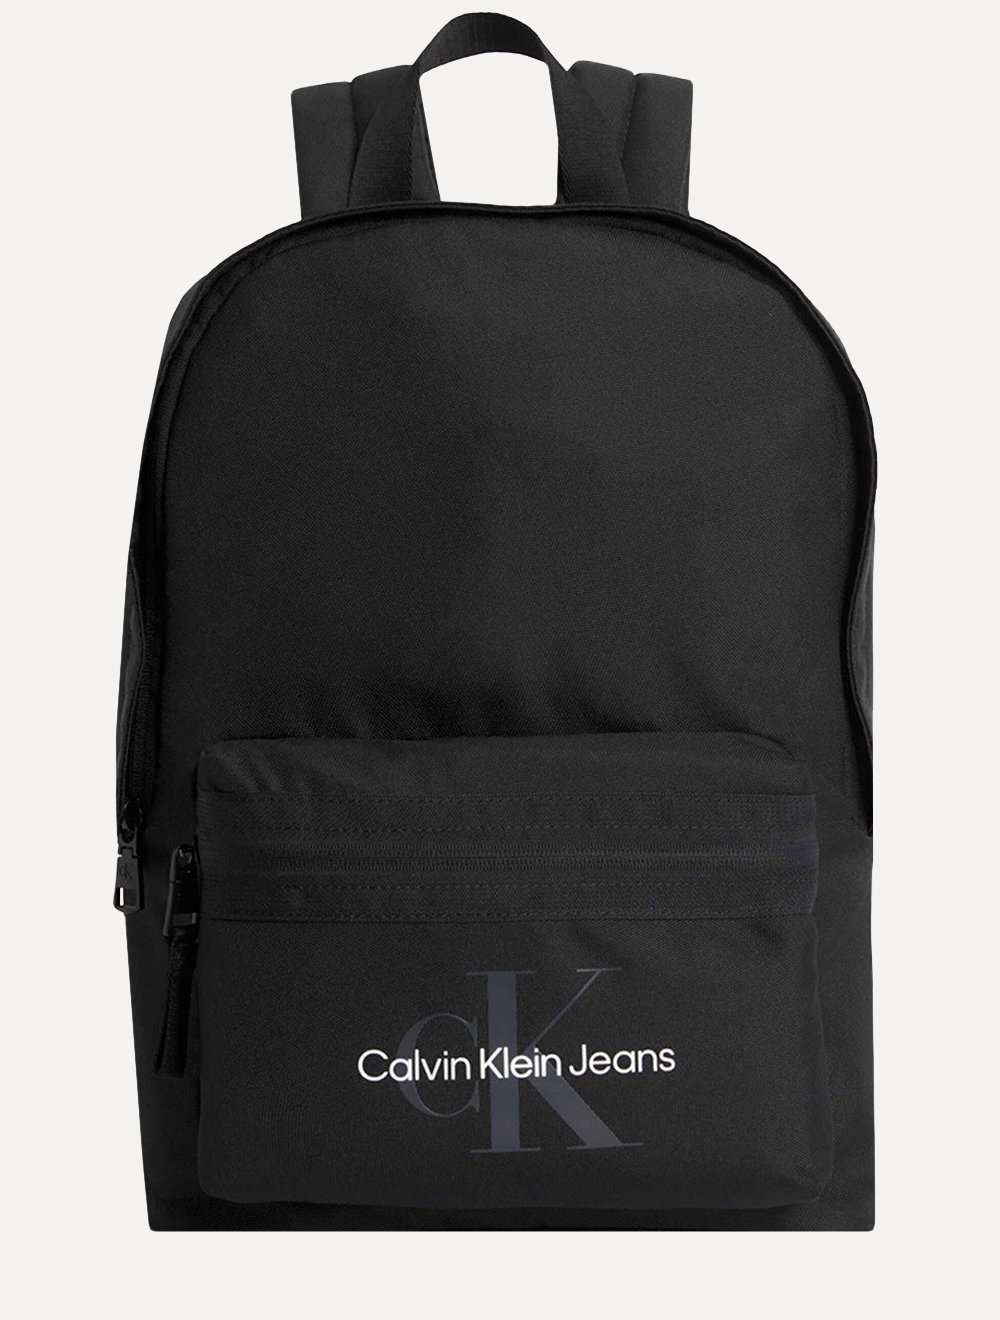 Mochila Calvin Klein Jeans Masculina Sports Essentials Campus Preta